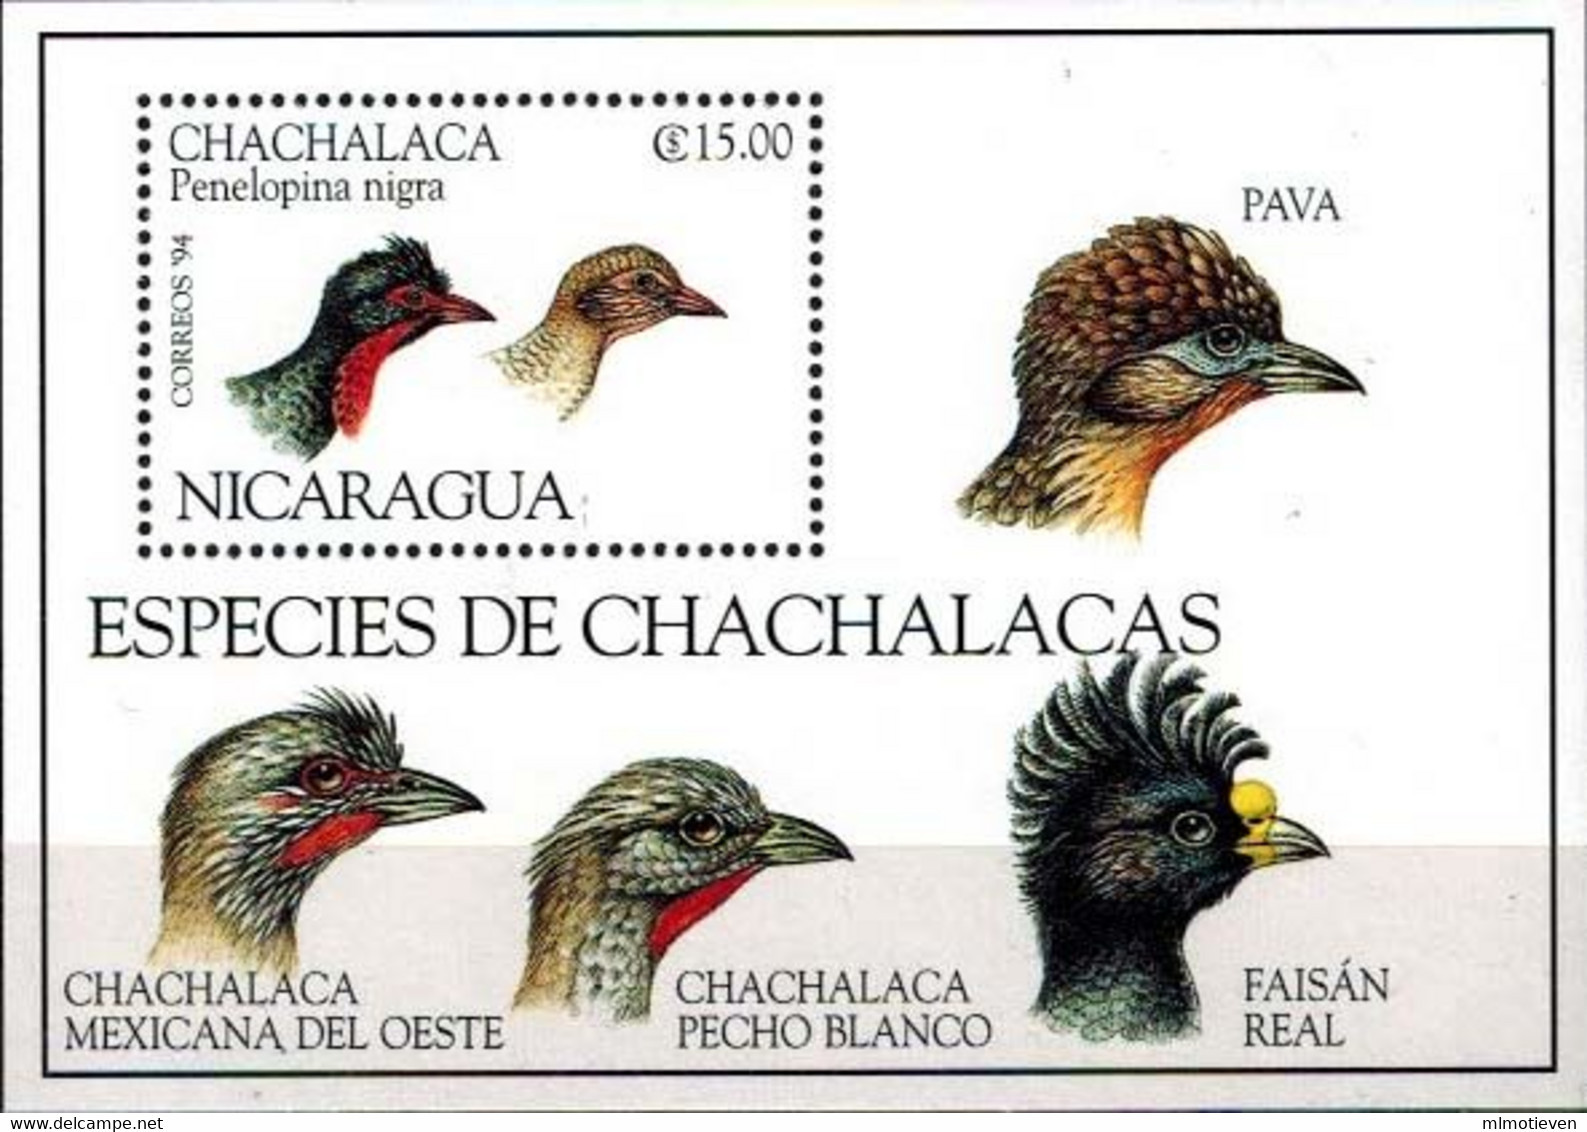 MDB-BK26-442 MINT ¤ NICARAGUA 1994 BLOCK ¤ BIRDS OF THE WORLD - OISEAUX - BIRDS - VOGELS - VÖGEL - AVES - PAJAROS - Gallinaceans & Pheasants